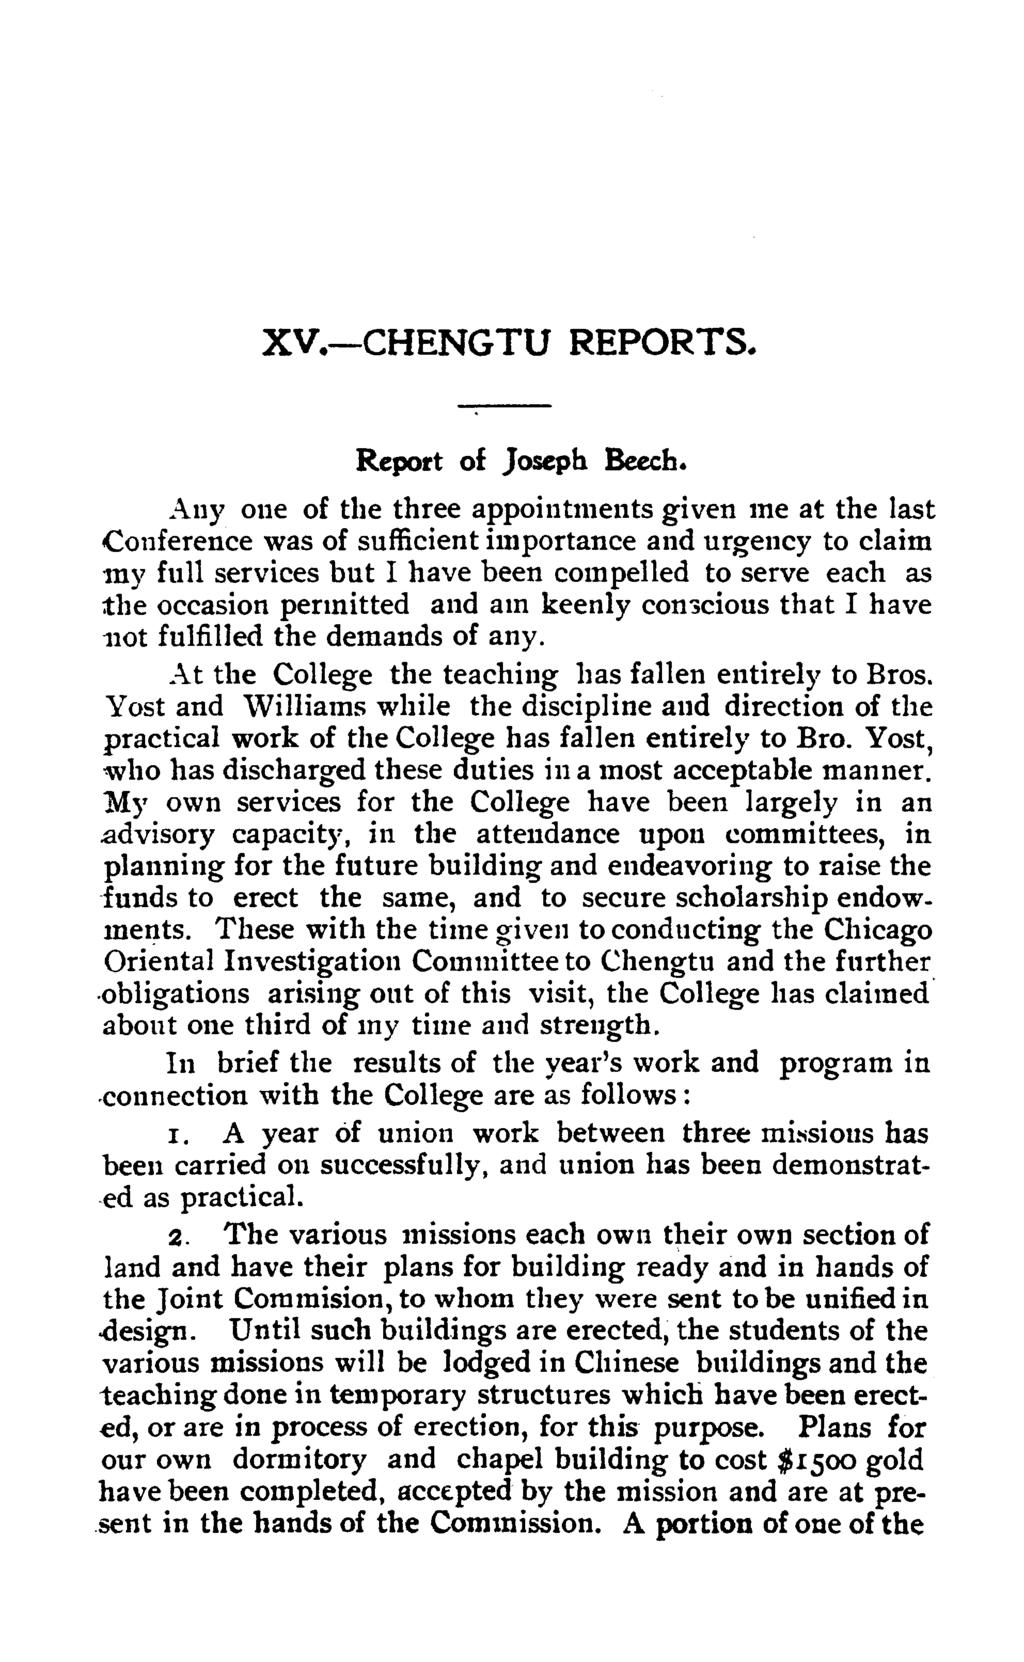 XV.-CHENGTU REPORTS. Report of Joseph Beech.